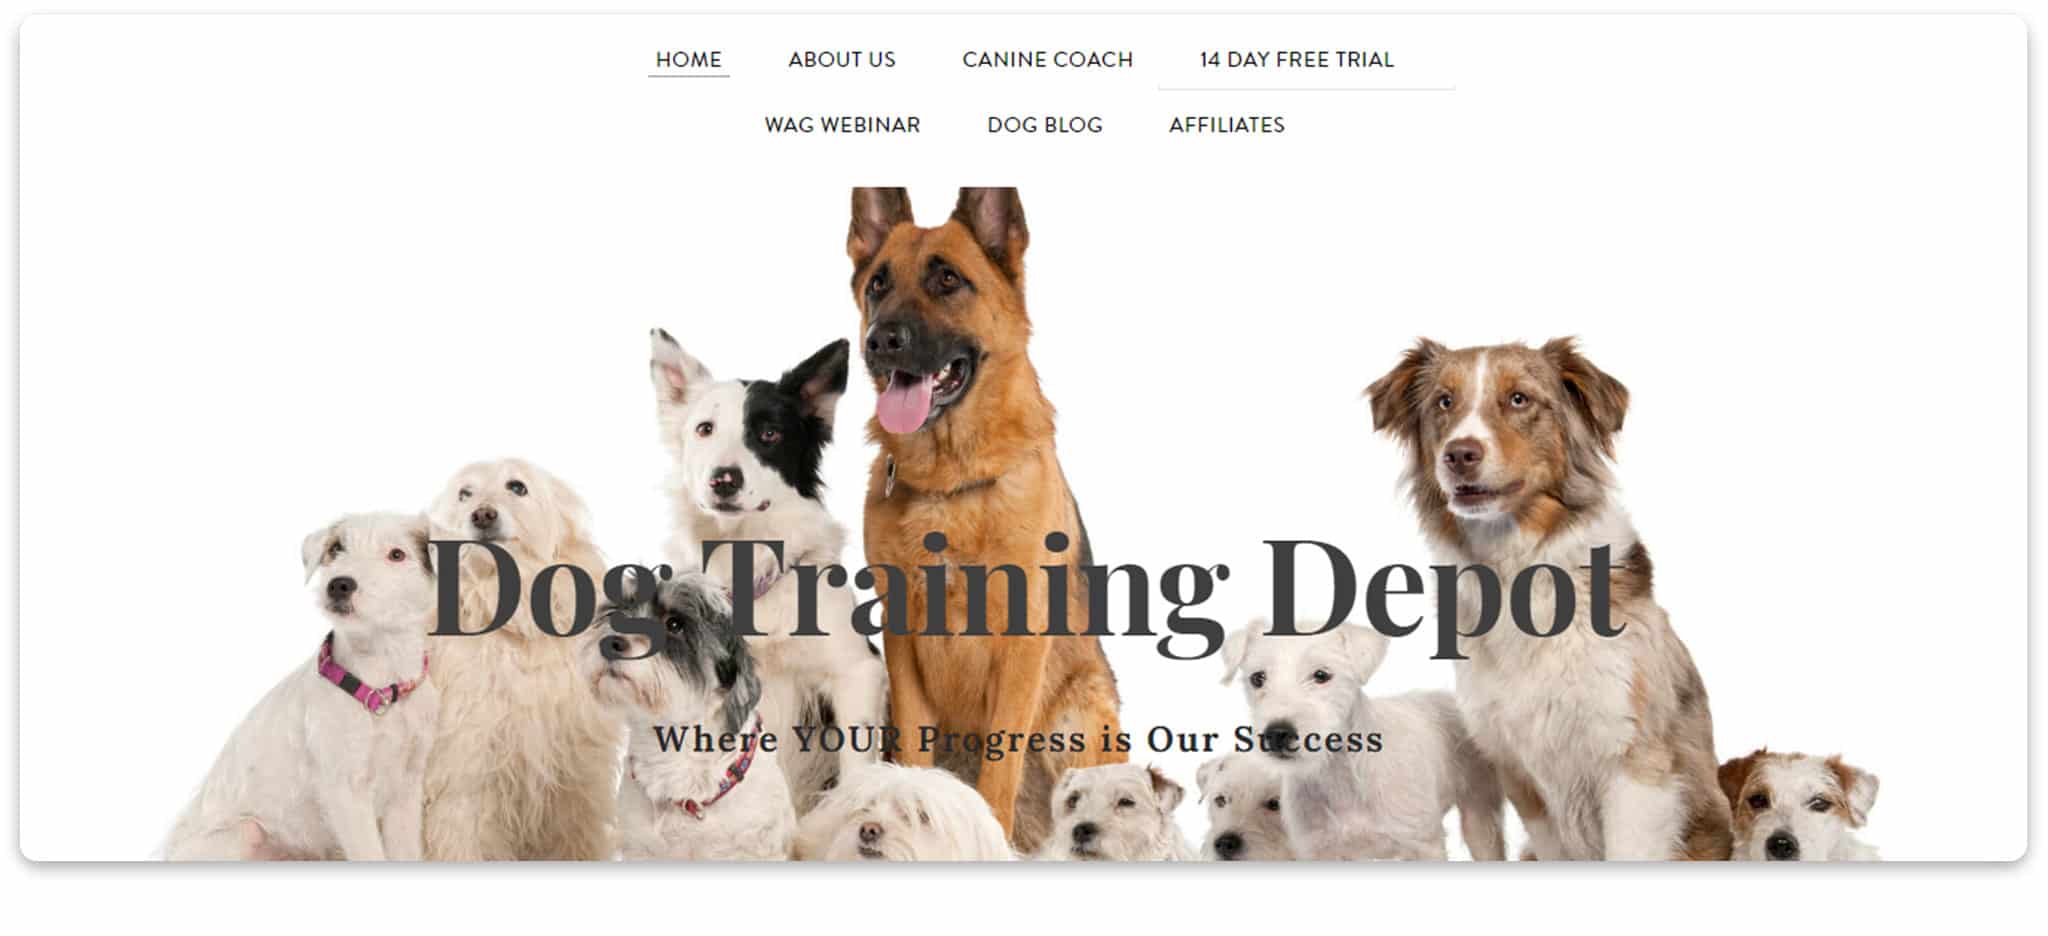 Dog Training Depot Affiliate